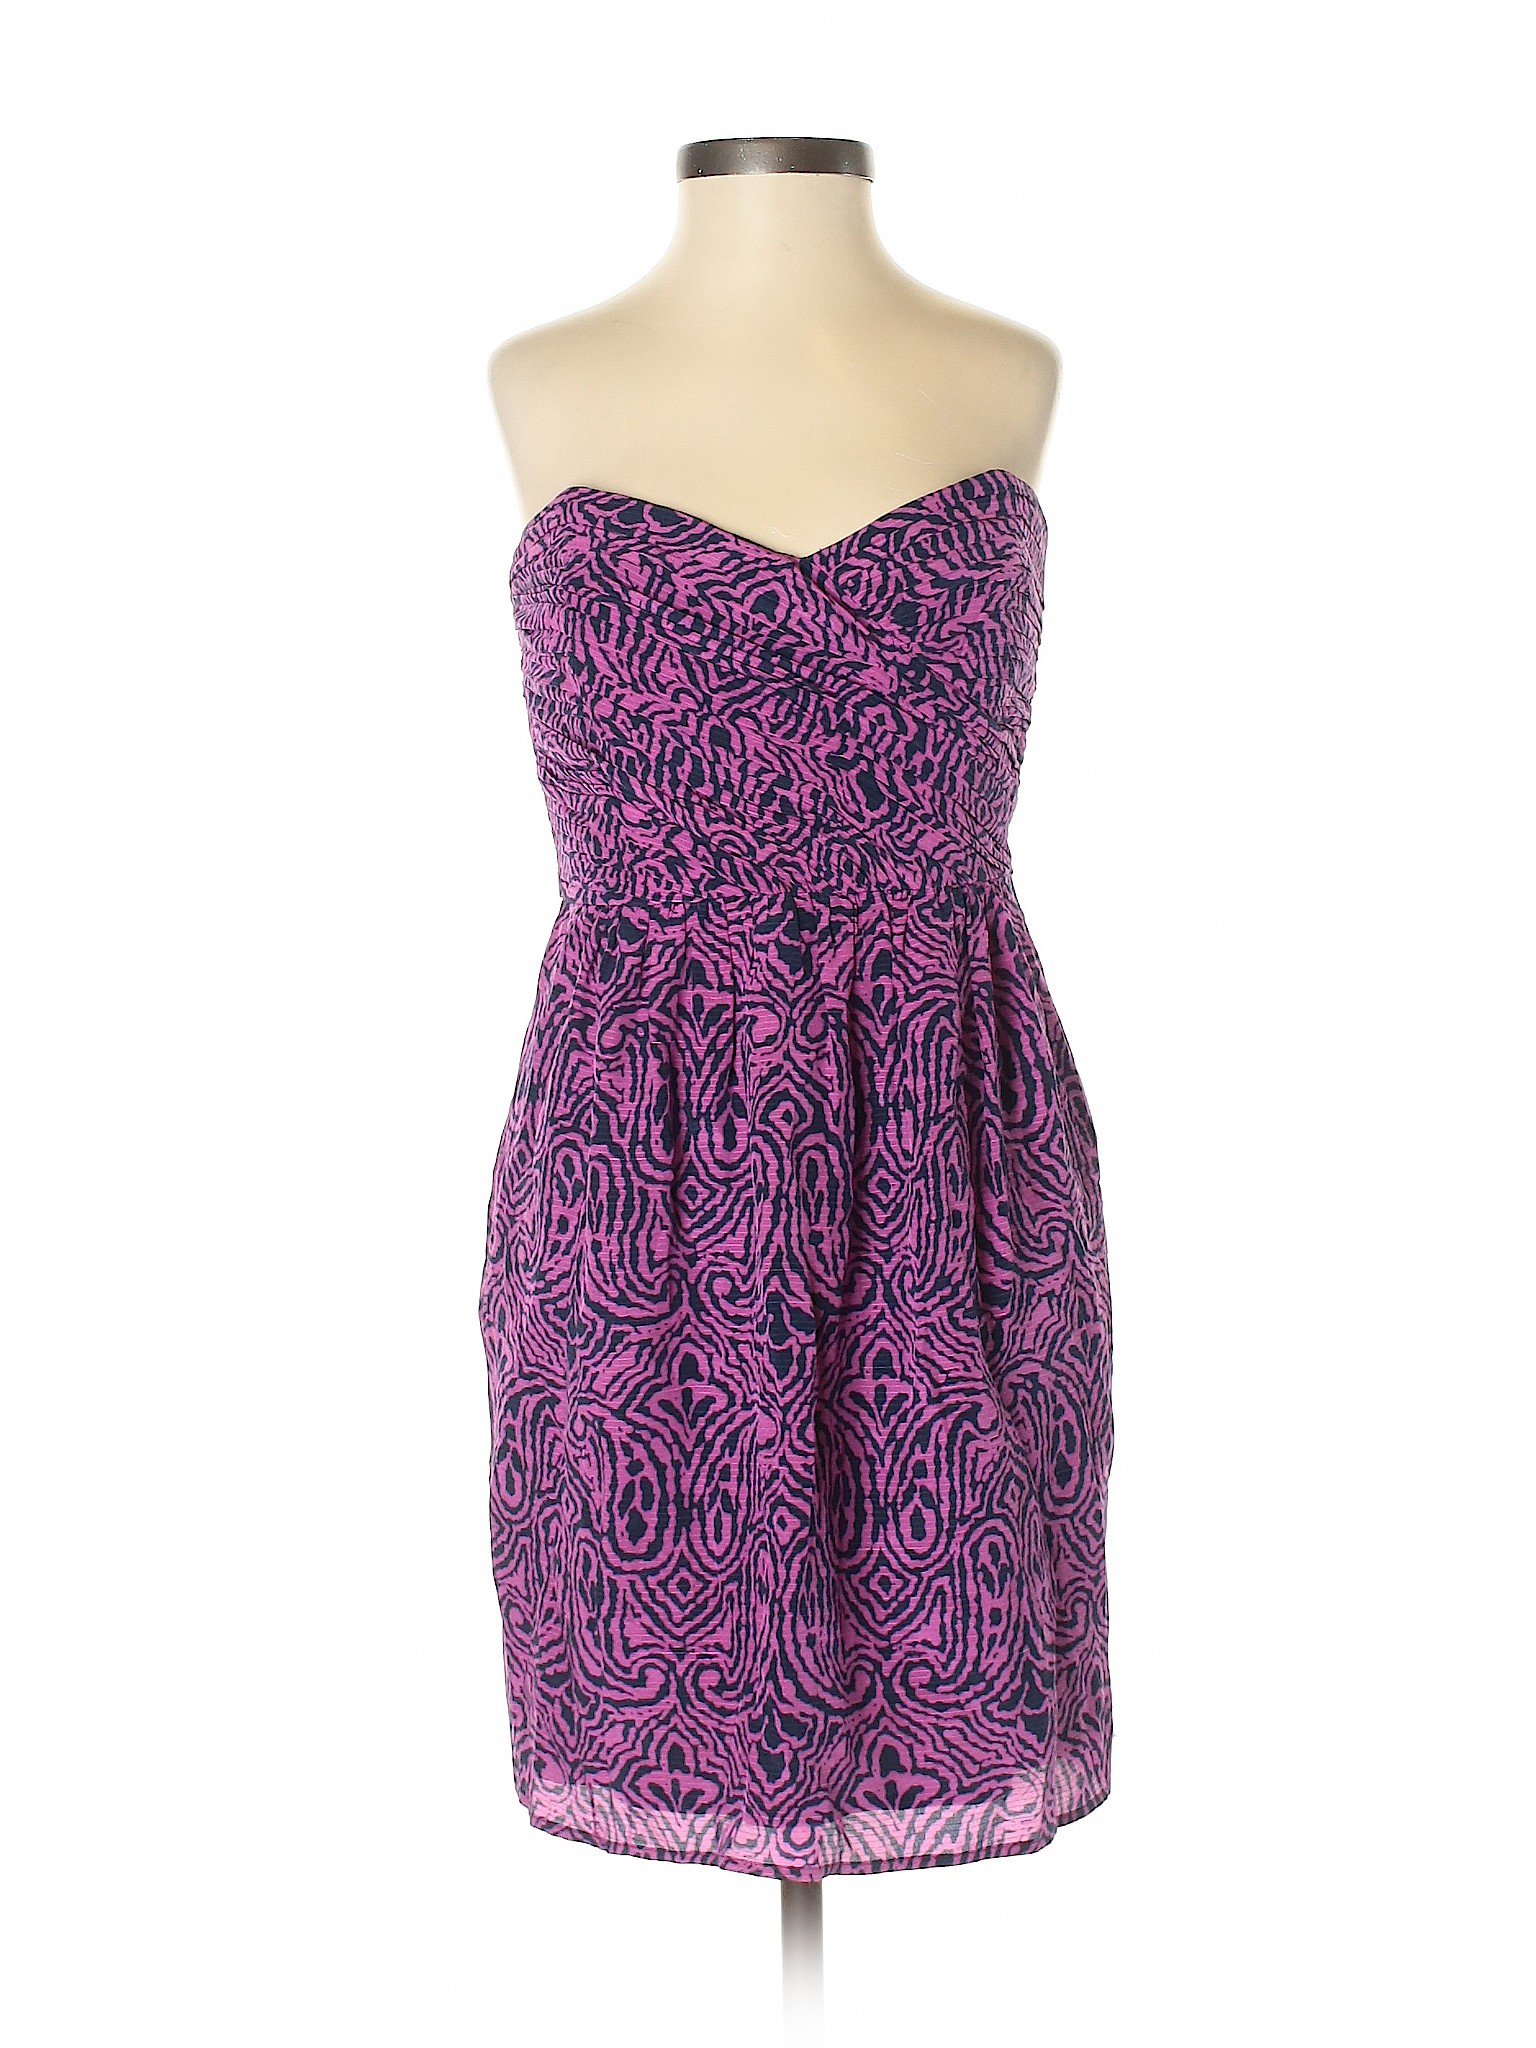 Shoshanna Women Purple Cocktail Dress 2 | eBay